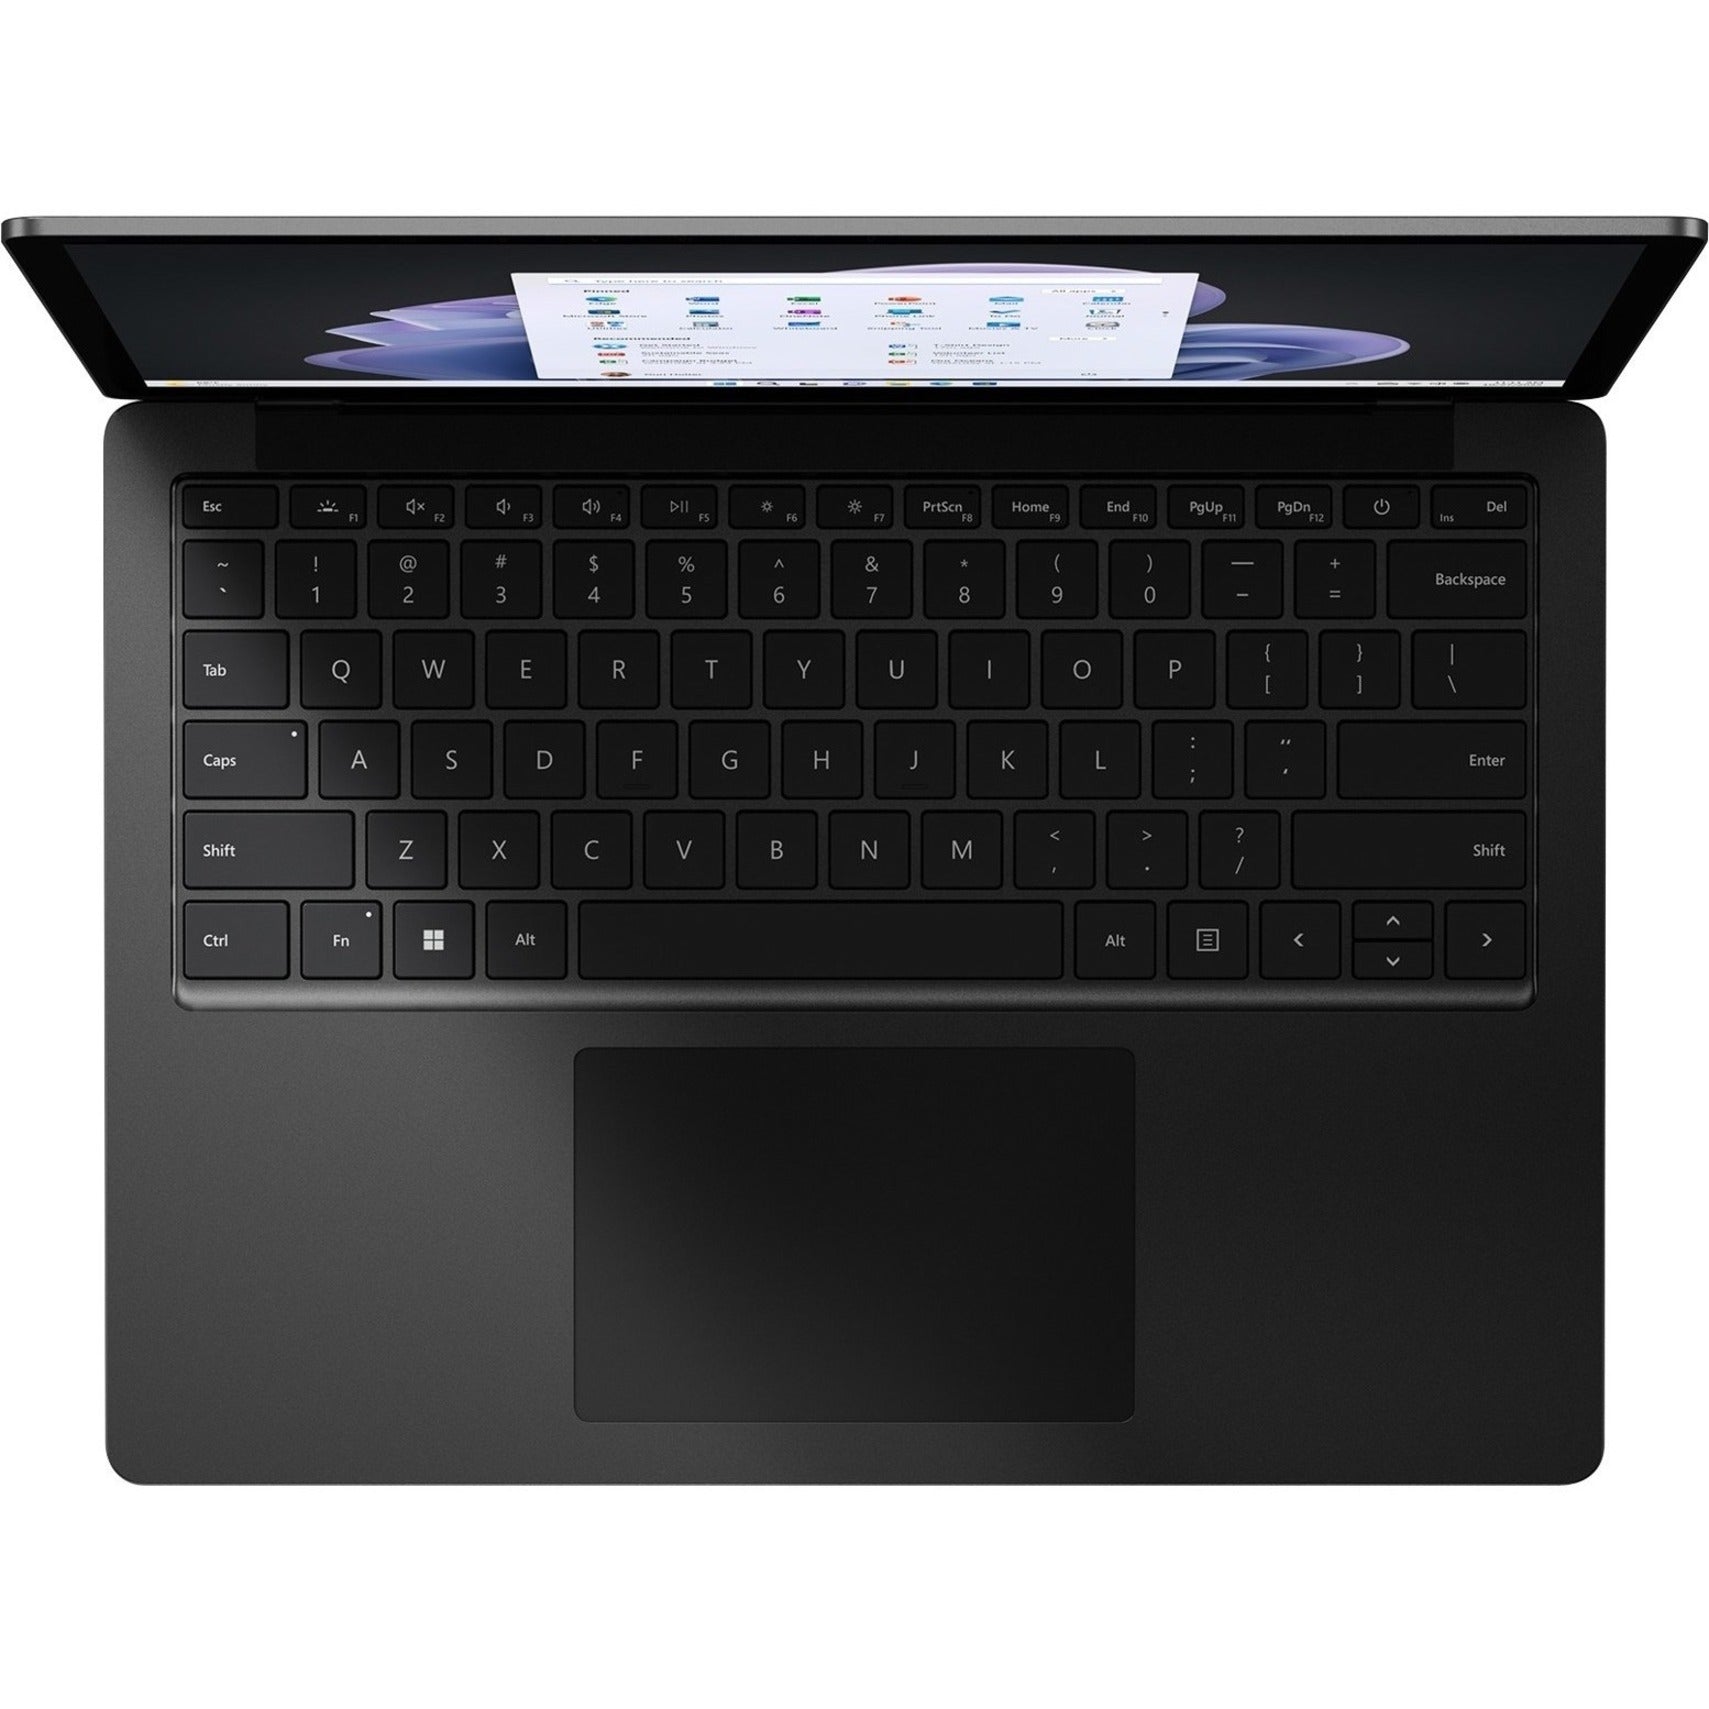 Microsoft R7I-00024 Surface Laptop 5 Notebook, 13.5" Touchscreen, Core i5, 16GB RAM, 256GB SSD, Windows 10 Pro